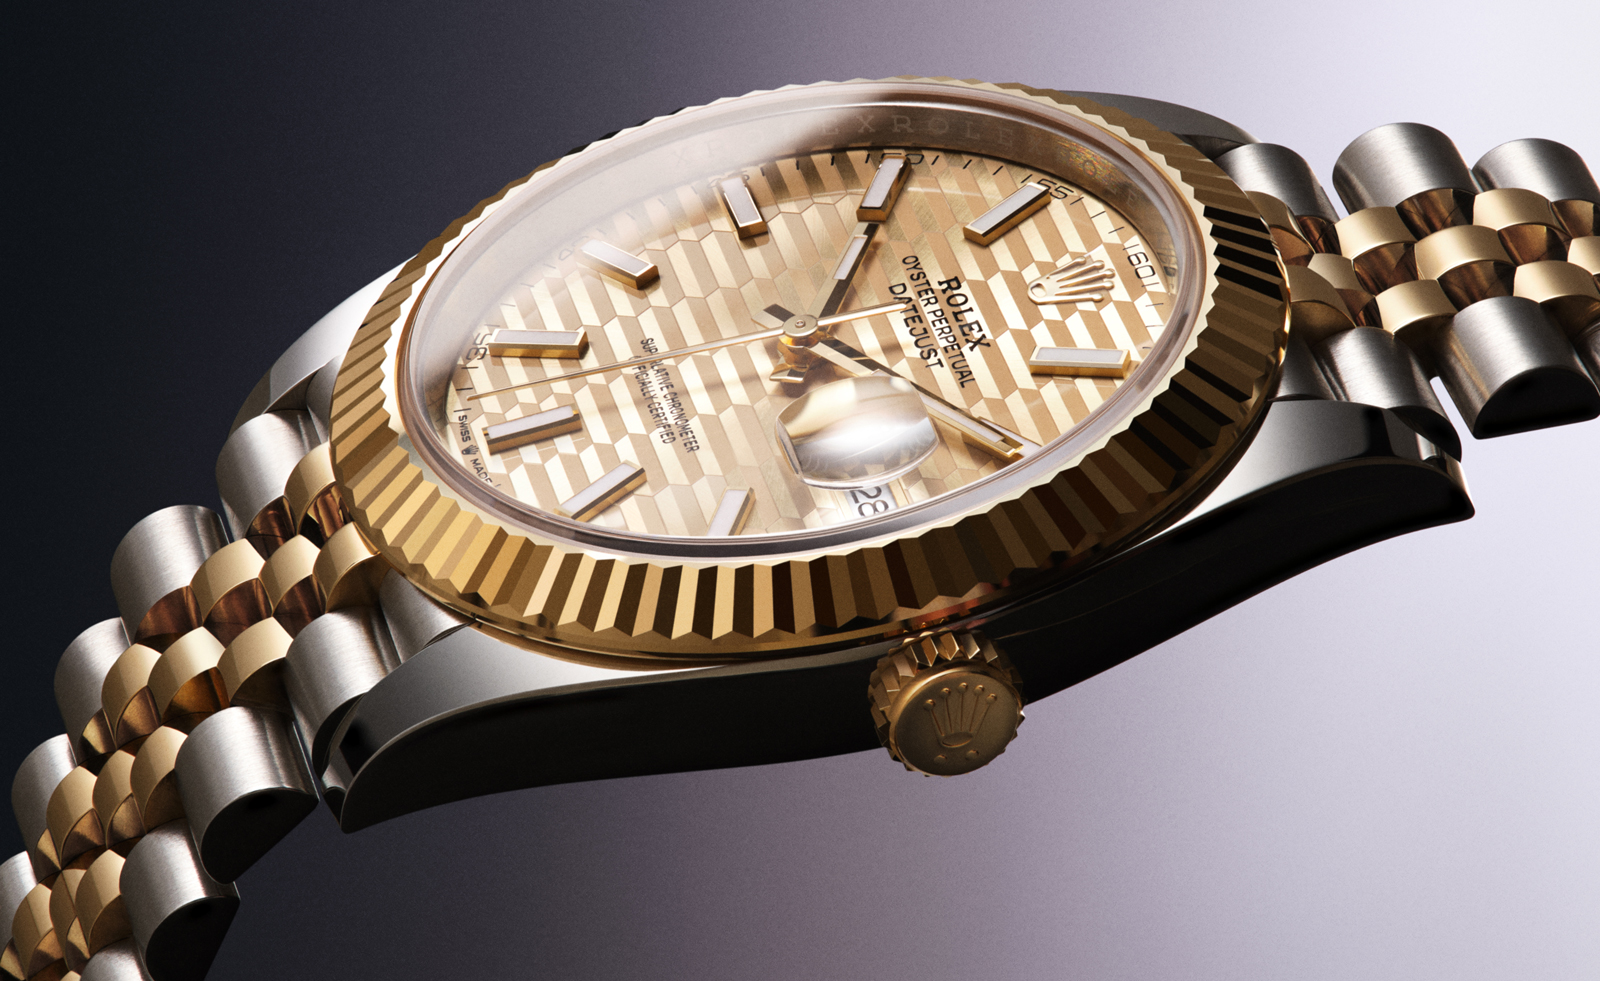 Rolex Datejust 41 watch rethinks a classic design